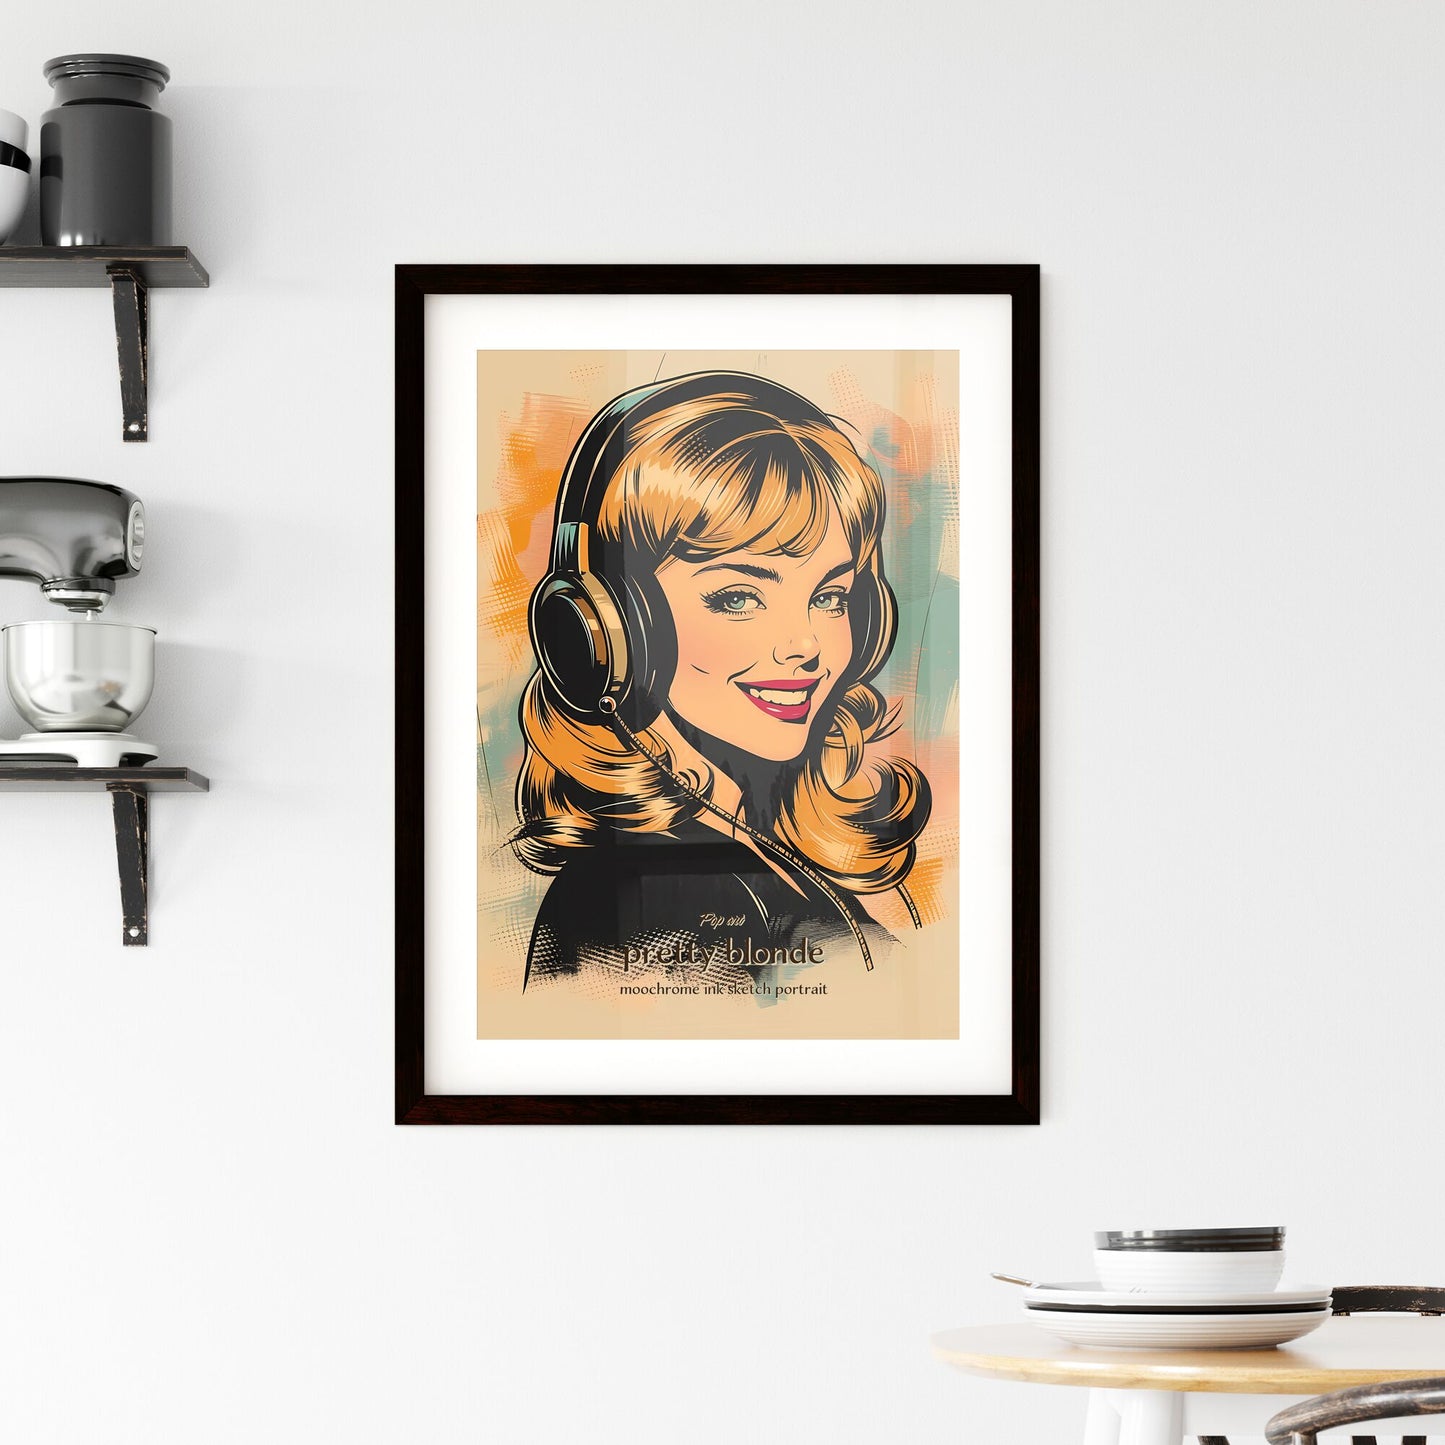 Pop art, pretty blonde, moochrome ink sketch portrait, A Poster of a woman wearing headphones Default Title